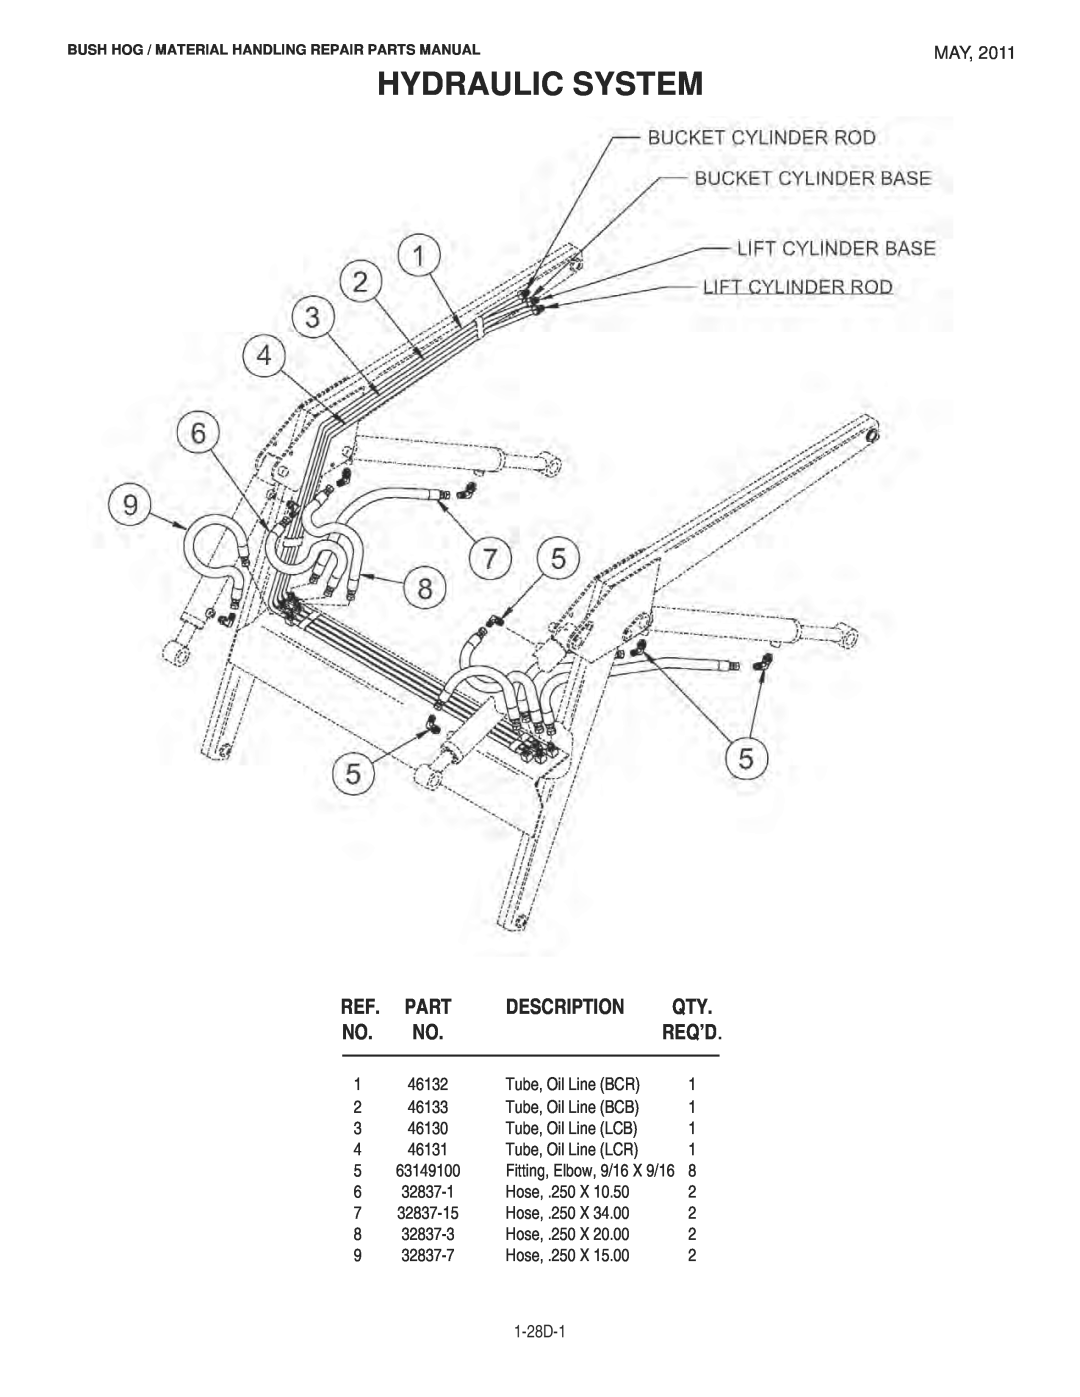 Bush Hog 1747 manual Hydraulic System, Description, Part, Req’D, Tube, Oil Line BCR, Tube, Oil Line BCB 